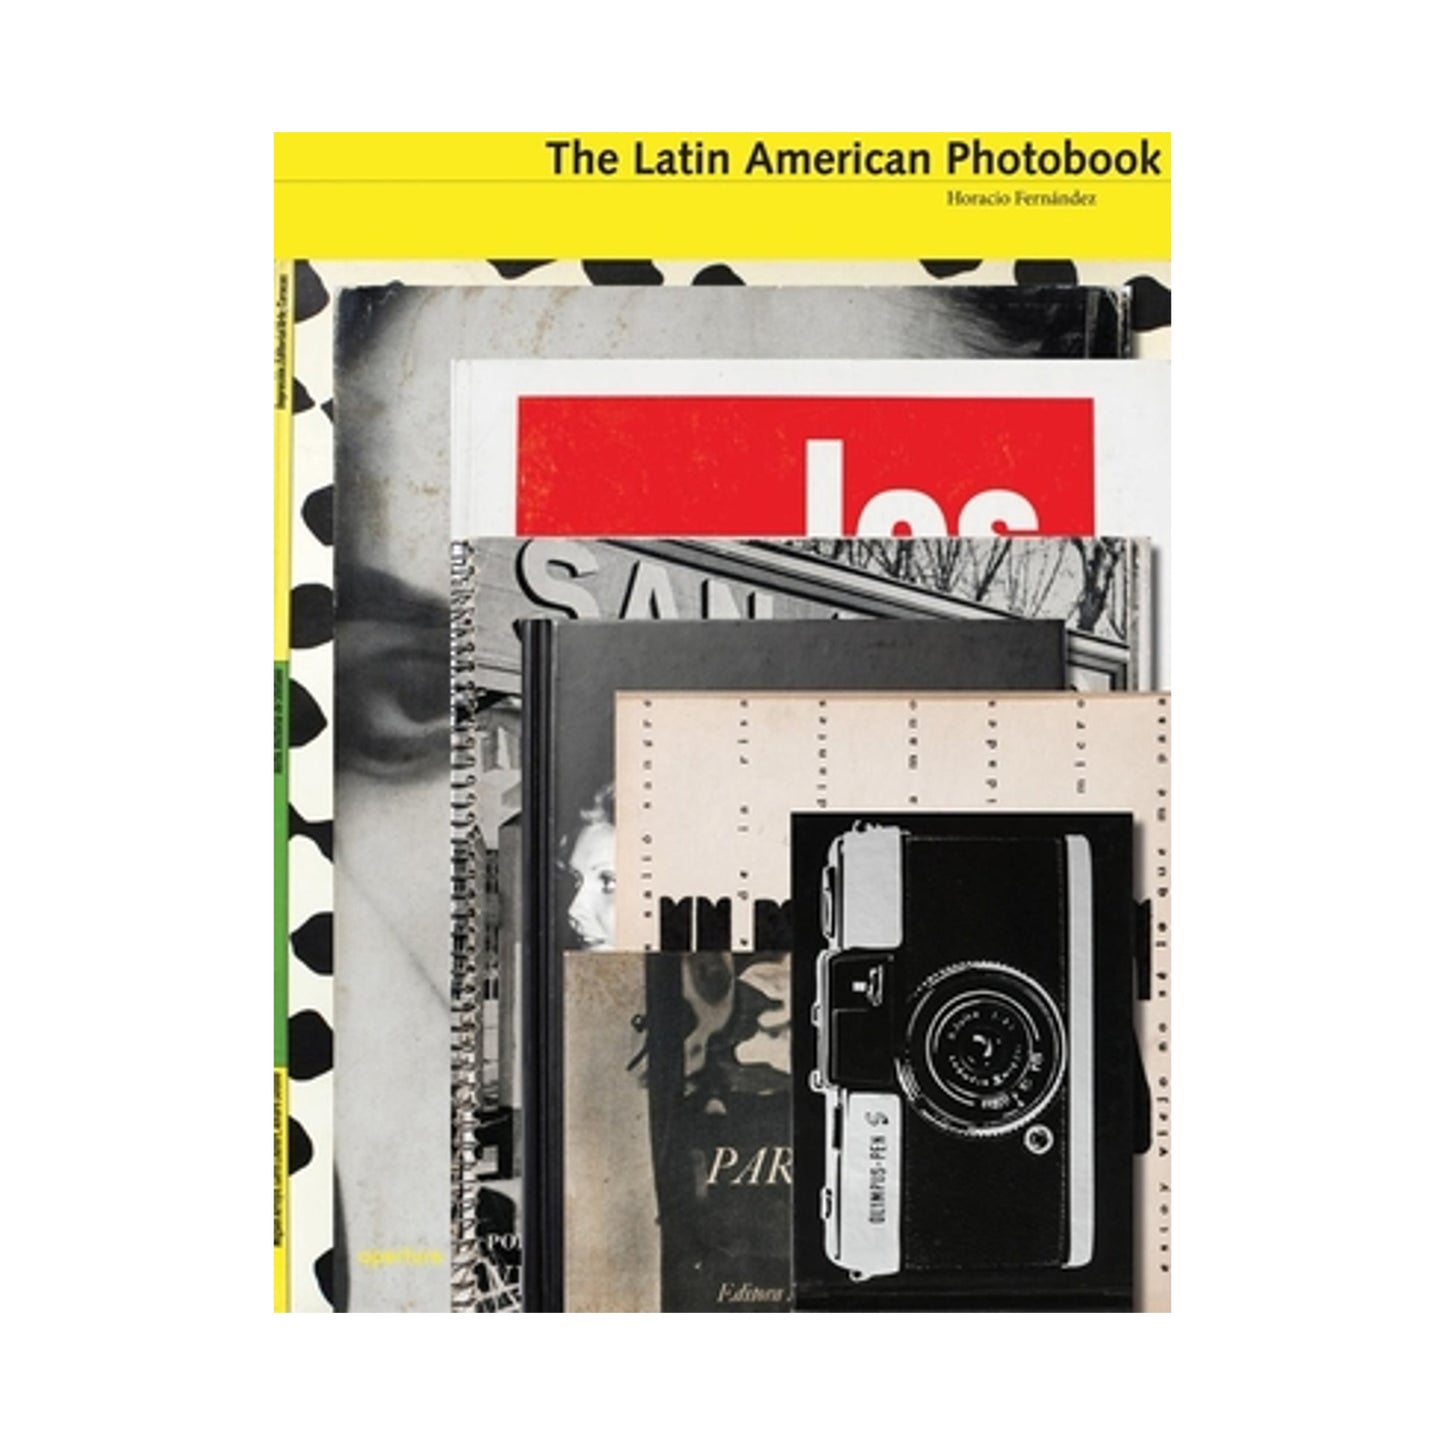 The Latin American Photobook by Horacio Fernandez Photo Museum Ireland